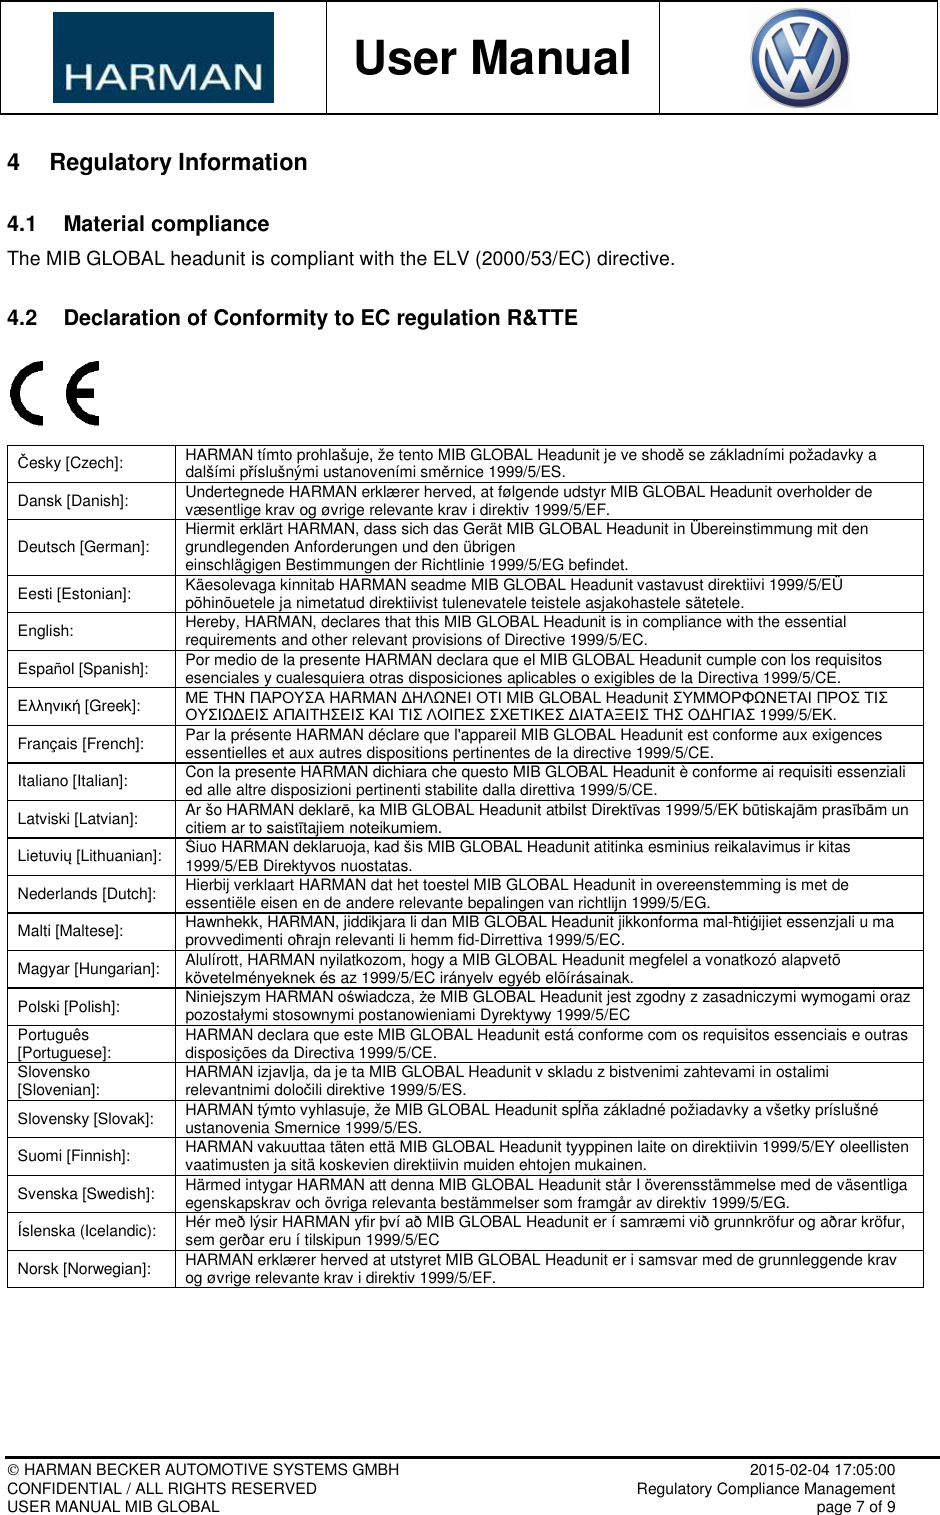           User Manual     HARMAN BECKER AUTOMOTIVE SYSTEMS GMBH    2015-02-04 17:05:00 CONFIDENTIAL / ALL RIGHTS RESERVED     Regulatory Compliance Management USER MANUAL MIB GLOBAL    page 7 of 9  4  Regulatory Information 4.1  Material compliance The MIB GLOBAL headunit is compliant with the ELV (2000/53/EC) directive. 4.2  Declaration of Conformity to EC regulation R&amp;TTE  Česky [Czech]:  HARMAN tímto prohlašuje, že tento MIB GLOBAL Headunit je ve shodě se základními požadavky a dalšími příslušnými ustanoveními směrnice 1999/5/ES. Dansk [Danish]:  Undertegnede HARMAN erklærer herved, at følgende udstyr MIB GLOBAL Headunit overholder de væsentlige krav og øvrige relevante krav i direktiv 1999/5/EF. Deutsch [German]:  Hiermit erklärt HARMAN, dass sich das Gerät MIB GLOBAL Headunit in Übereinstimmung mit den grundlegenden Anforderungen und den übrigen einschlägigen Bestimmungen der Richtlinie 1999/5/EG befindet. Eesti [Estonian]:  Käesolevaga kinnitab HARMAN seadme MIB GLOBAL Headunit vastavust direktiivi 1999/5/EÜ põhinõuetele ja nimetatud direktiivist tulenevatele teistele asjakohastele sätetele. English:  Hereby, HARMAN, declares that this MIB GLOBAL Headunit is in compliance with the essential requirements and other relevant provisions of Directive 1999/5/EC. Español [Spanish]:  Por medio de la presente HARMAN declara que el MIB GLOBAL Headunit cumple con los requisitos esenciales y cualesquiera otras disposiciones aplicables o exigibles de la Directiva 1999/5/CE. Ελληνική [Greek]: ΜΕ ΤΗΝ ΠΑΡΟΥΣΑ HARMAN ∆ΗΛΩΝΕΙ ΟΤΙ MIB GLOBAL Headunit ΣΥΜΜΟΡΦΩΝΕΤΑΙ ΠΡΟΣ ΤΙΣ ΟΥΣΙΩ∆ΕΙΣ ΑΠΑΙΤΗΣΕΙΣ ΚΑΙ ΤΙΣ ΛΟΙΠΕΣ ΣΧΕΤΙΚΕΣ ∆ΙΑΤΑΞΕΙΣ ΤΗΣ Ο∆ΗΓΙΑΣ 1999/5/ΕΚ. Français [French]:  Par la présente HARMAN déclare que l&apos;appareil MIB GLOBAL Headunit est conforme aux exigences essentielles et aux autres dispositions pertinentes de la directive 1999/5/CE. Italiano [Italian]:  Con la presente HARMAN dichiara che questo MIB GLOBAL Headunit è conforme ai requisiti essenziali ed alle altre disposizioni pertinenti stabilite dalla direttiva 1999/5/CE. Latviski [Latvian]:  Ar šo HARMAN deklarē, ka MIB GLOBAL Headunit atbilst Direktīvas 1999/5/EK būtiskajām prasībām un citiem ar to saistītajiem noteikumiem. Lietuvių [Lithuanian]:  Šiuo HARMAN deklaruoja, kad šis MIB GLOBAL Headunit atitinka esminius reikalavimus ir kitas 1999/5/EB Direktyvos nuostatas. Nederlands [Dutch]:  Hierbij verklaart HARMAN dat het toestel MIB GLOBAL Headunit in overeenstemming is met de essentiële eisen en de andere relevante bepalingen van richtlijn 1999/5/EG. Malti [Maltese]:  Hawnhekk, HARMAN, jiddikjara li dan MIB GLOBAL Headunit jikkonforma mal-ħtiġijiet essenzjali u ma provvedimenti oħrajn relevanti li hemm fid-Dirrettiva 1999/5/EC. Magyar [Hungarian]:  Alulírott, HARMAN nyilatkozom, hogy a MIB GLOBAL Headunit megfelel a vonatkozó alapvetõ követelményeknek és az 1999/5/EC irányelv egyéb elõírásainak. Polski [Polish]:  Niniejszym HARMAN oświadcza, że MIB GLOBAL Headunit jest zgodny z zasadniczymi wymogami oraz pozostałymi stosownymi postanowieniami Dyrektywy 1999/5/EC Português [Portuguese]:  HARMAN declara que este MIB GLOBAL Headunit está conforme com os requisitos essenciais e outras disposições da Directiva 1999/5/CE. Slovensko [Slovenian]:  HARMAN izjavlja, da je ta MIB GLOBAL Headunit v skladu z bistvenimi zahtevami in ostalimi relevantnimi določili direktive 1999/5/ES. Slovensky [Slovak]:  HARMAN týmto vyhlasuje, že MIB GLOBAL Headunit spĺňa základné požiadavky a všetky príslušné ustanovenia Smernice 1999/5/ES. Suomi [Finnish]:  HARMAN vakuuttaa täten että MIB GLOBAL Headunit tyyppinen laite on direktiivin 1999/5/EY oleellisten vaatimusten ja sitä koskevien direktiivin muiden ehtojen mukainen. Svenska [Swedish]:  Härmed intygar HARMAN att denna MIB GLOBAL Headunit står I överensstämmelse med de väsentliga egenskapskrav och övriga relevanta bestämmelser som framgår av direktiv 1999/5/EG. Íslenska (Icelandic):  Hér með lýsir HARMAN yfir því að MIB GLOBAL Headunit er í samræmi við grunnkröfur og aðrar kröfur, sem gerðar eru í tilskipun 1999/5/EC Norsk [Norwegian]:  HARMAN erklærer herved at utstyret MIB GLOBAL Headunit er i samsvar med de grunnleggende krav og øvrige relevante krav i direktiv 1999/5/EF.    